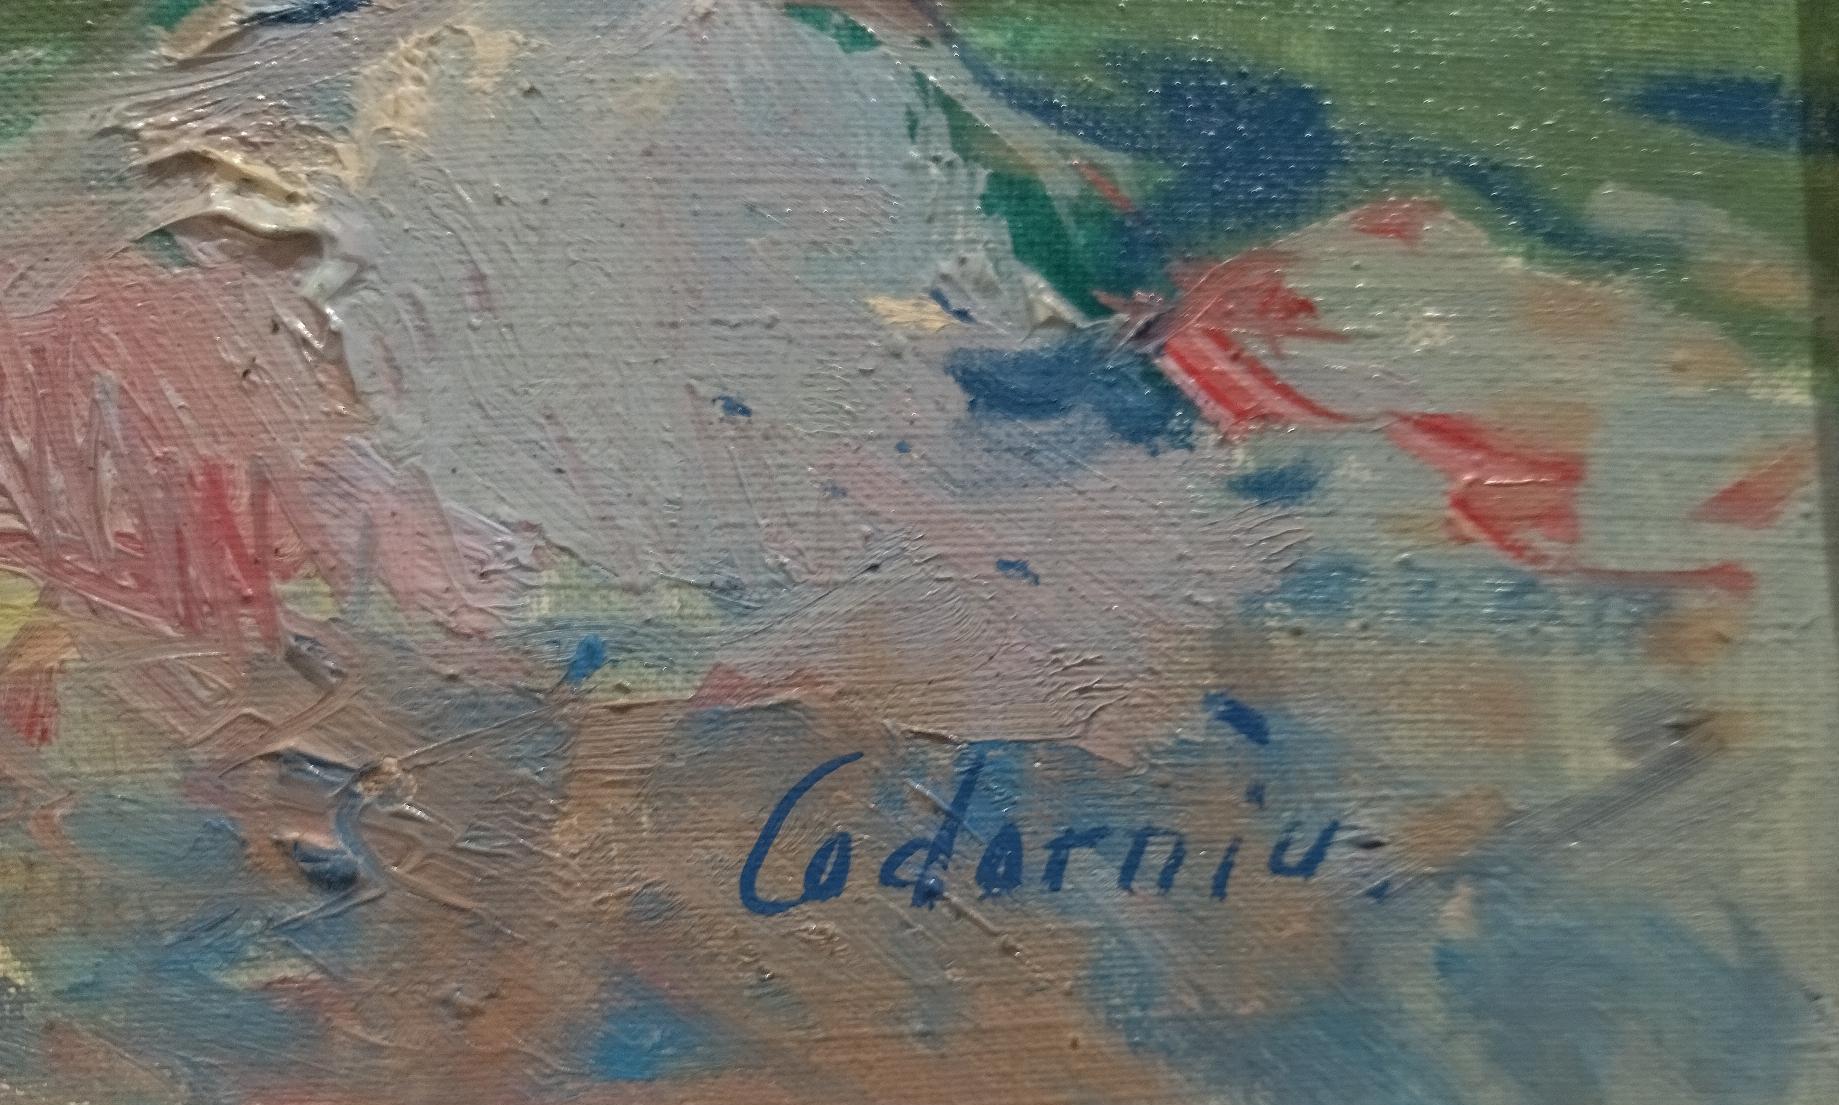  Codorniu    Majorca   expressionist acrylic painting - Expressionist Painting by Daniel Codorniu